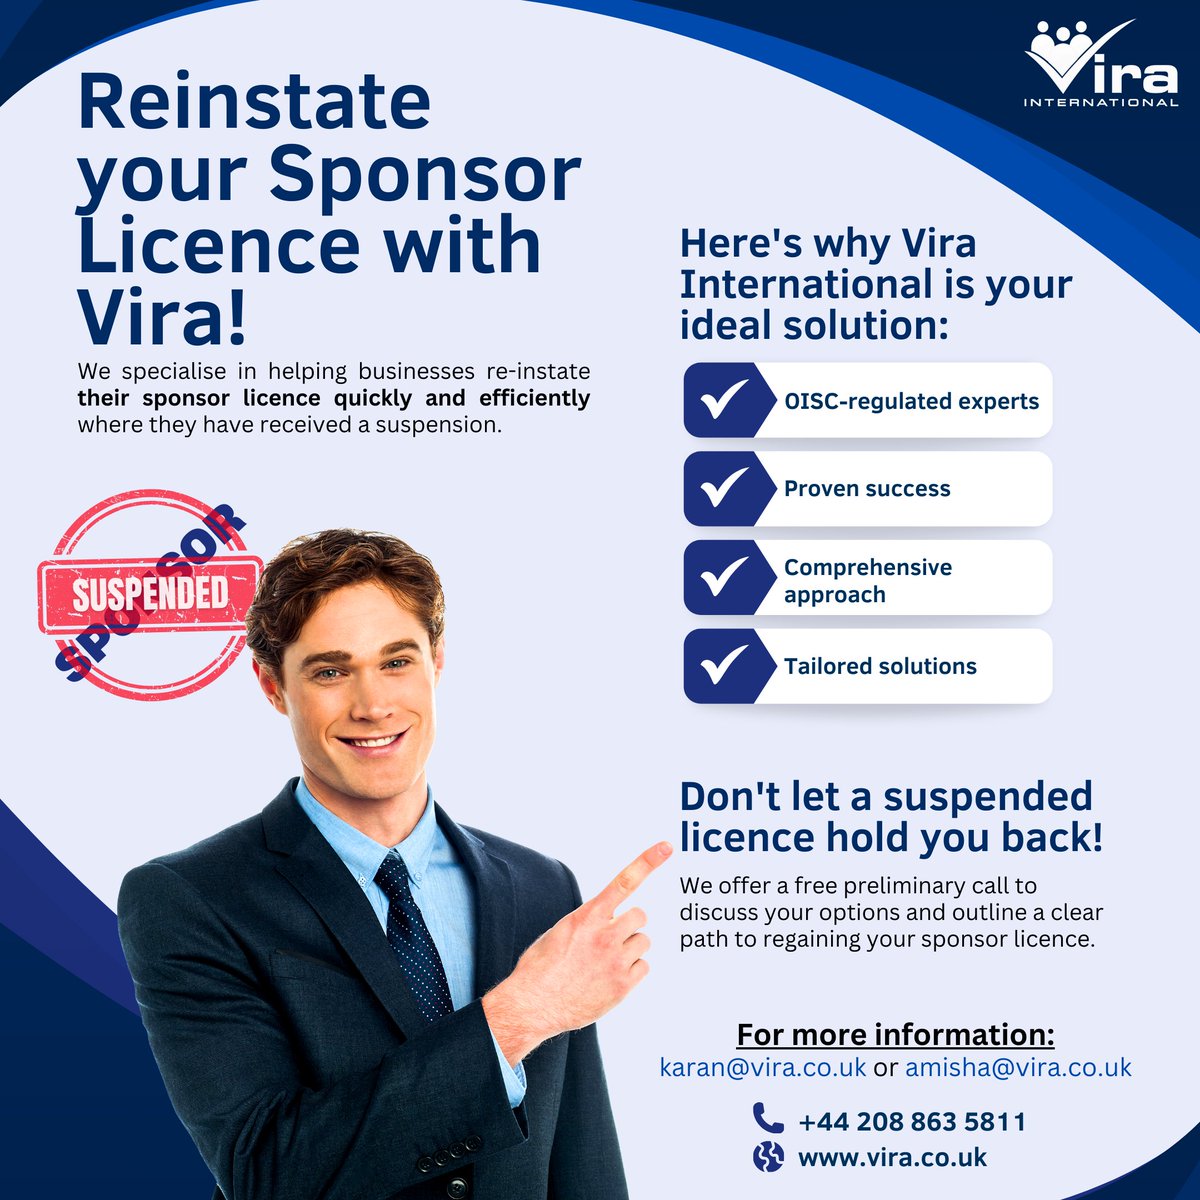 Reinstate your Sponsor Licence with Vira!

For more information: karan@vira.co.uk or amisha@vira.co.uk I +44 208 863 5811

#ViraUk #Hospitality #Jobs #SponsorLicence #RecruitmentAgency #Reinstatesponsorlicence #Immigration